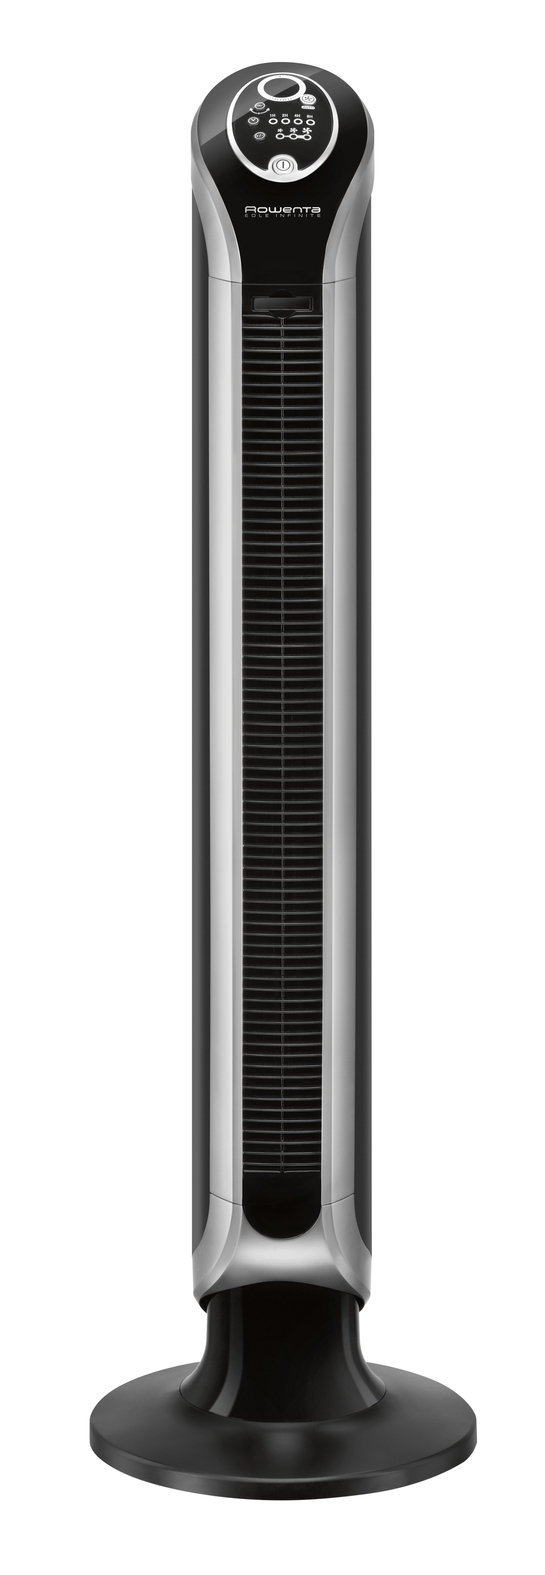 Rowenta ventilator vu6670f0